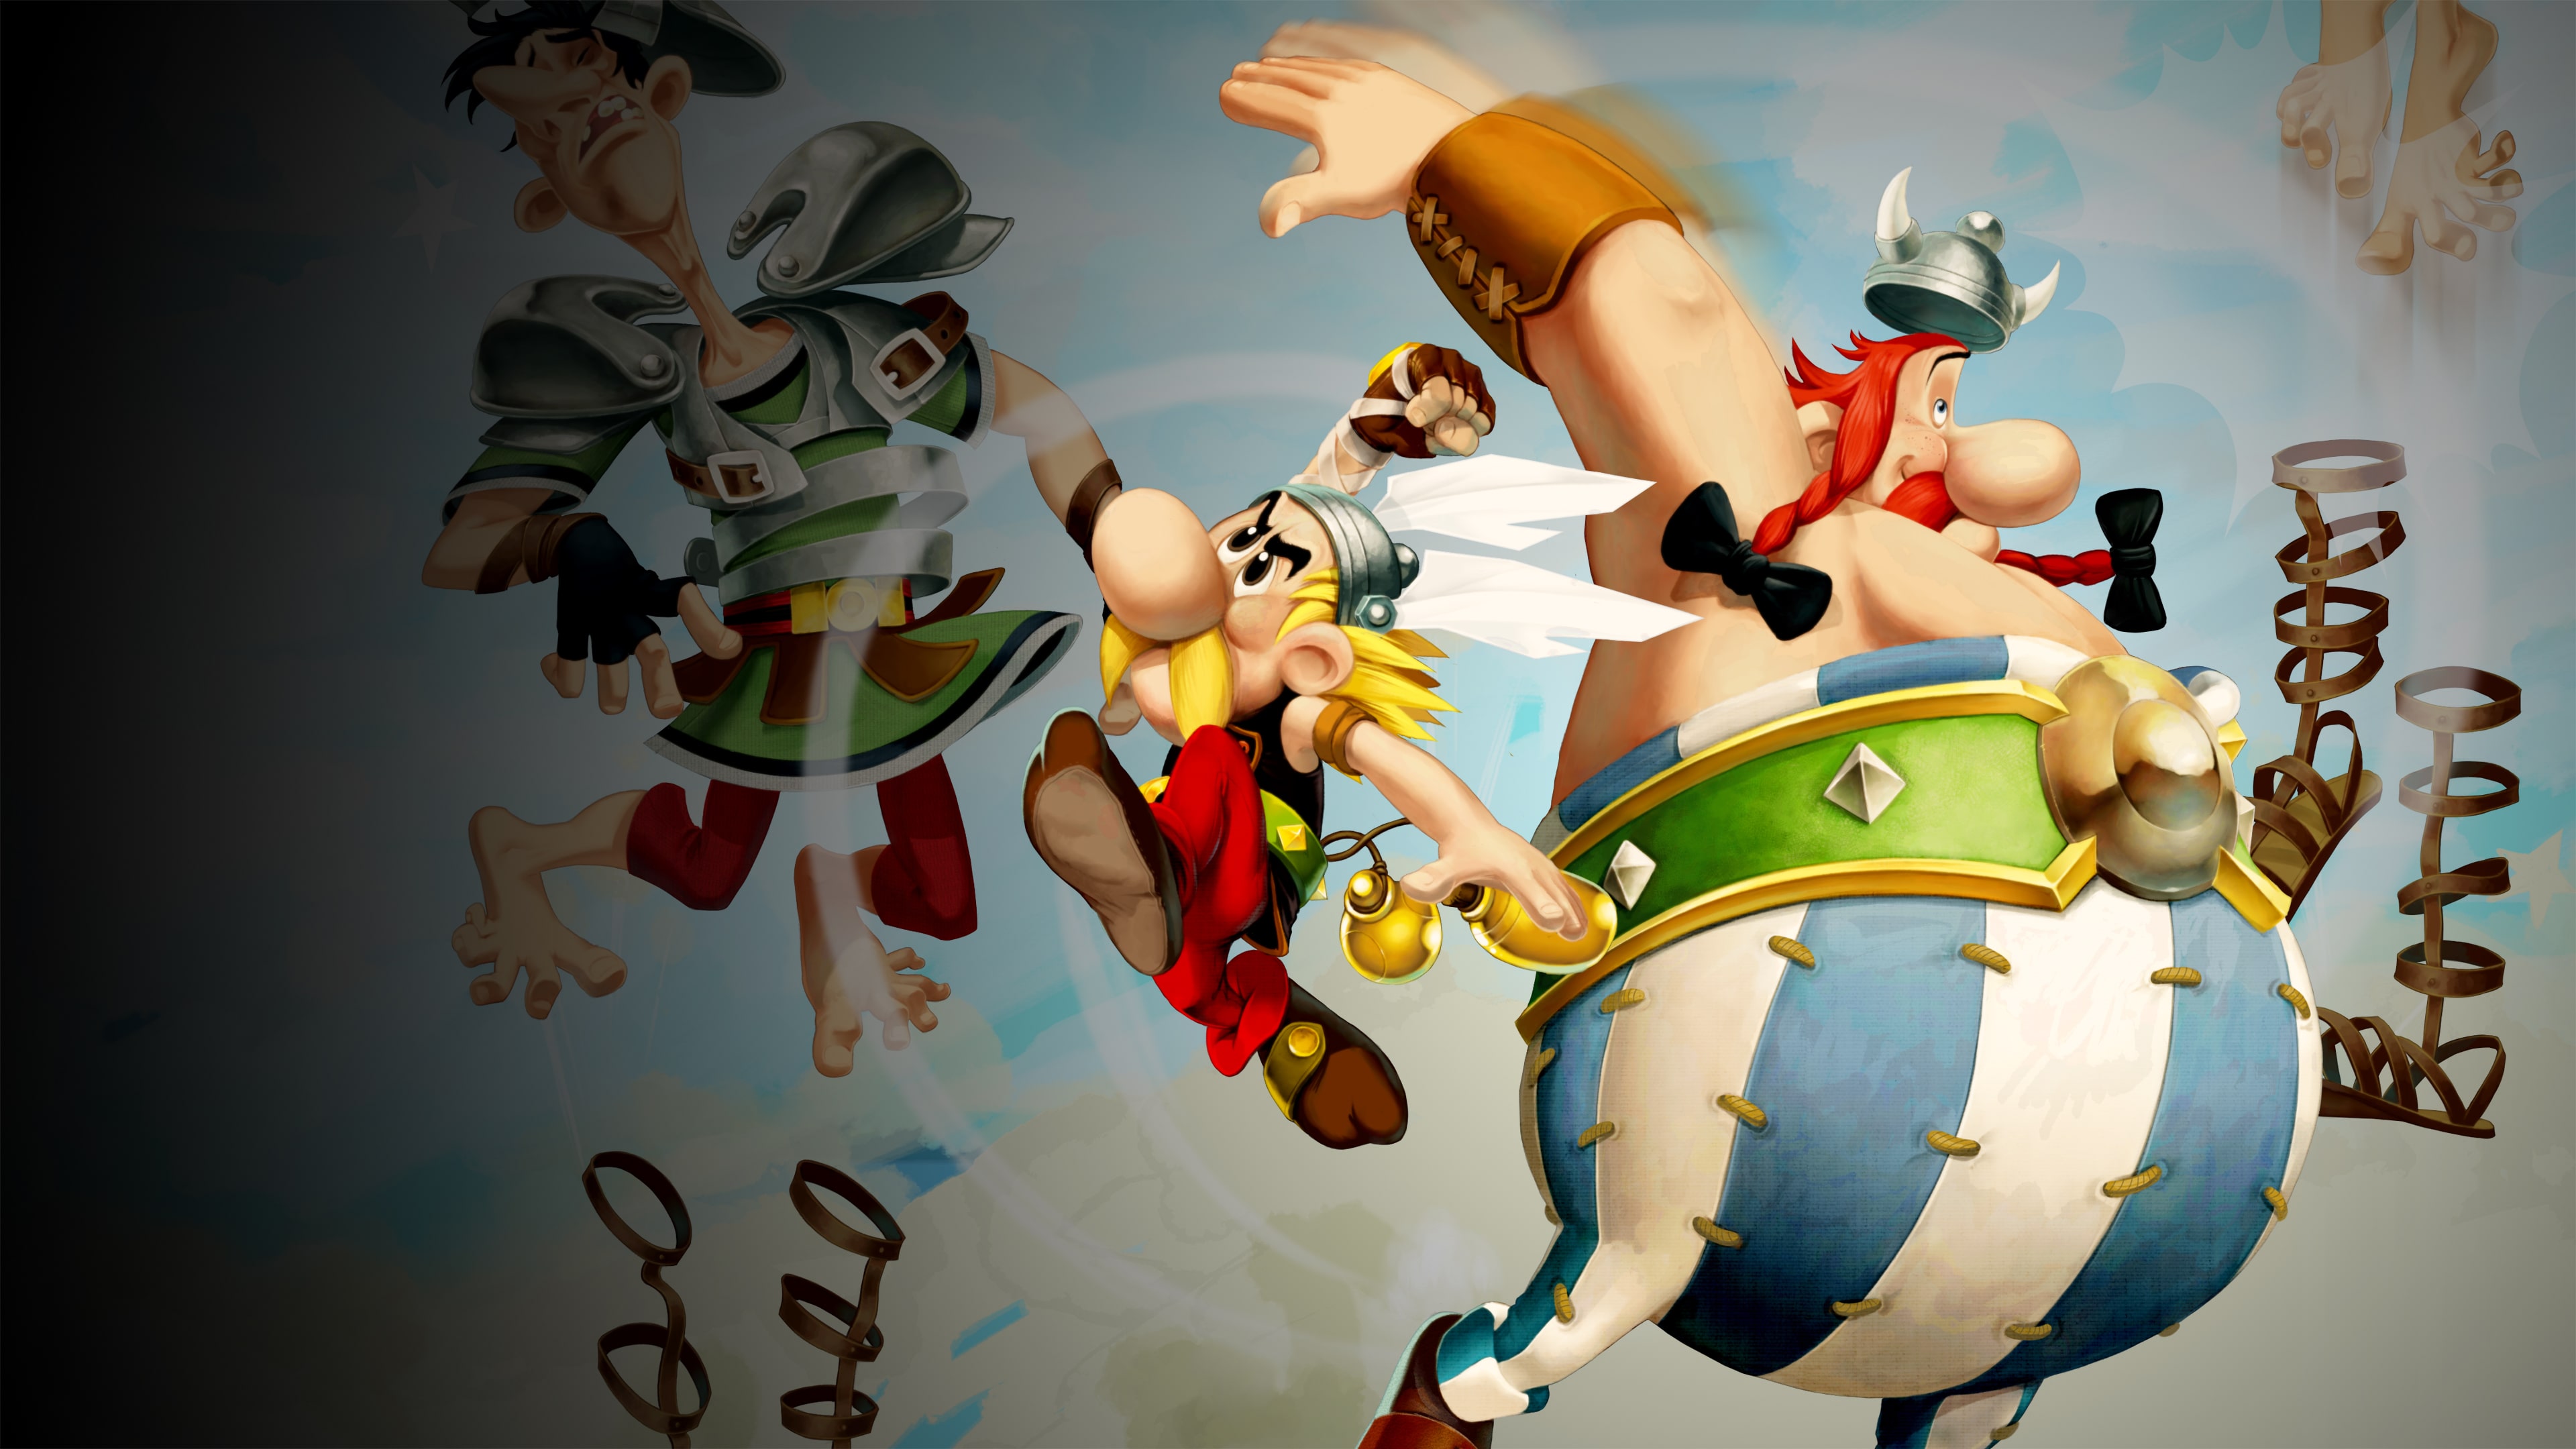 Roman Rumble in Las Vegum - Asterix & Obelix XXL 2